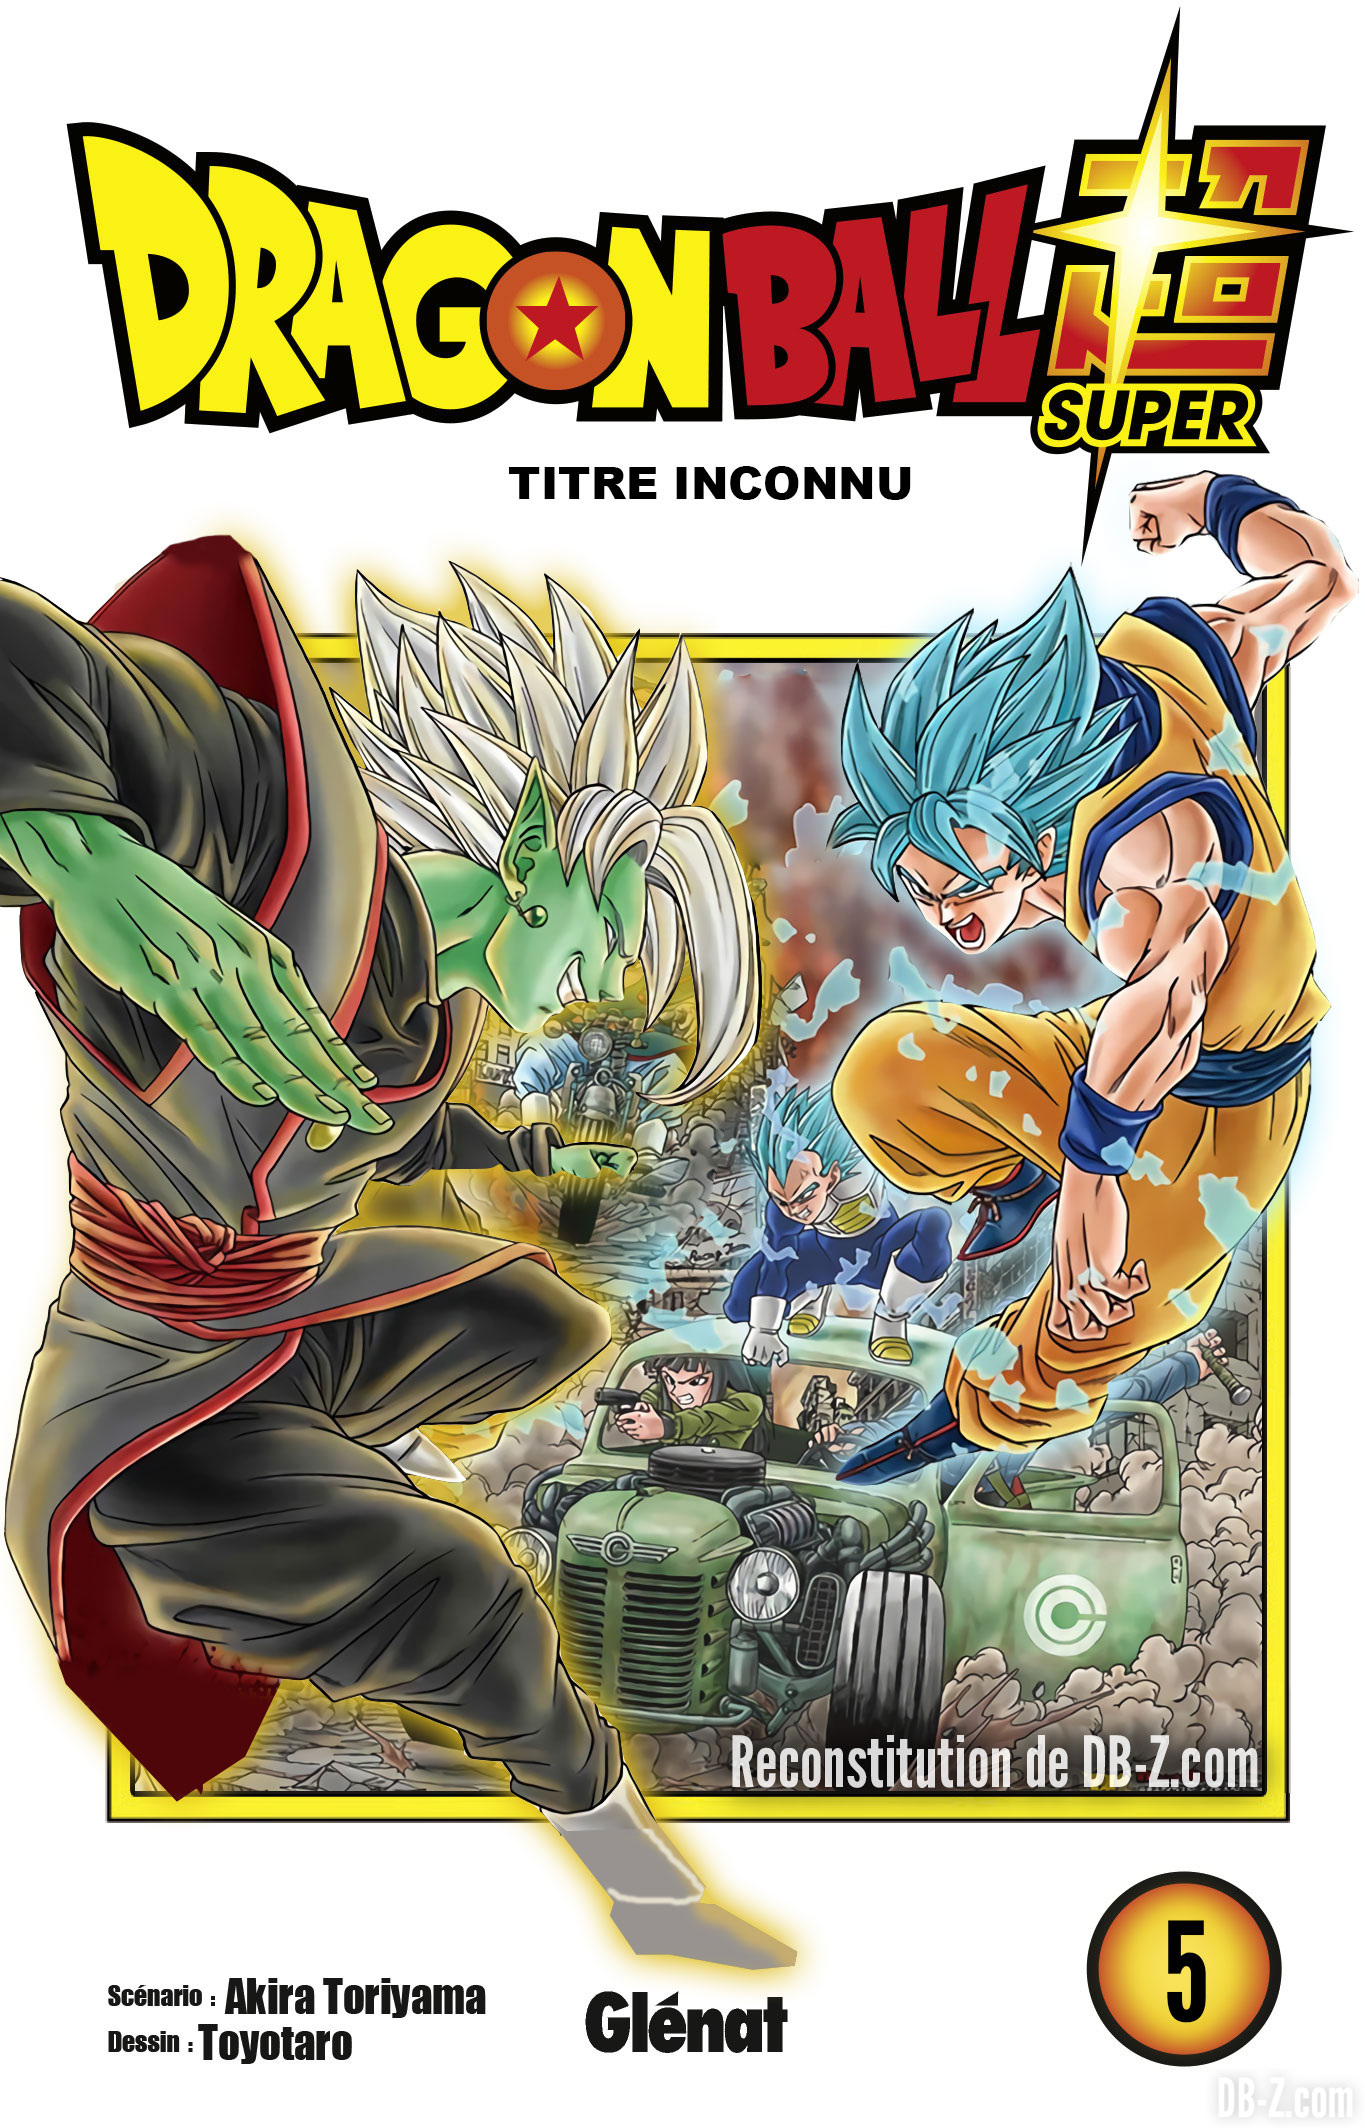 Dragon Ball Super : La cover du TOME 5 se dévoile !